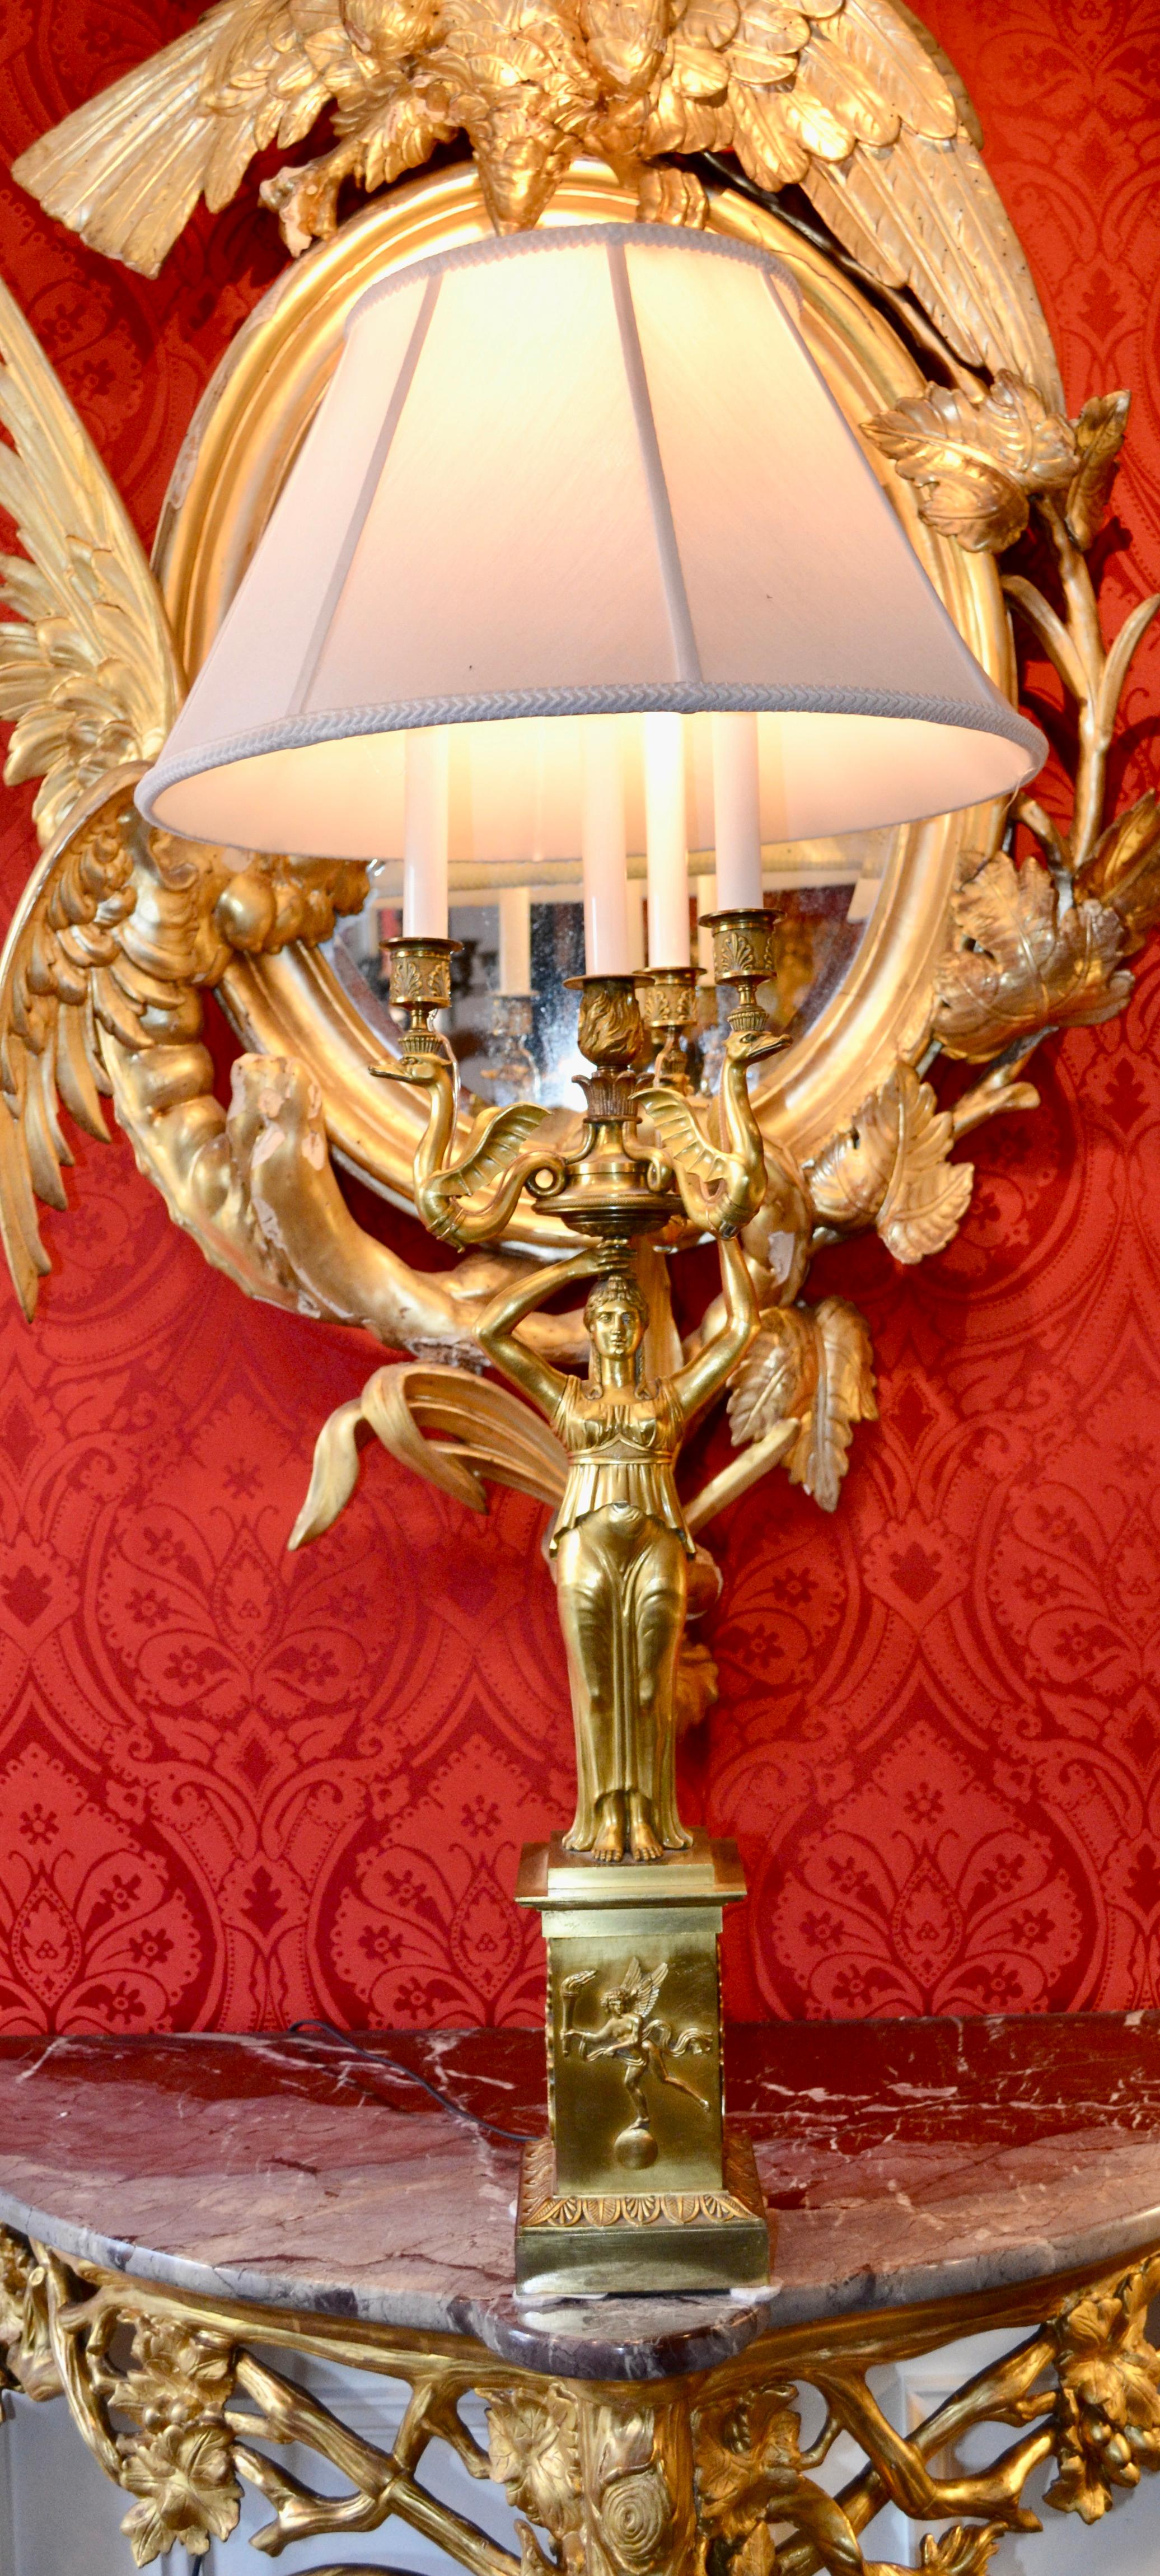 19th Century Russian Empire Gilt Bronze Figural Candelabra Lamp For Sale 6